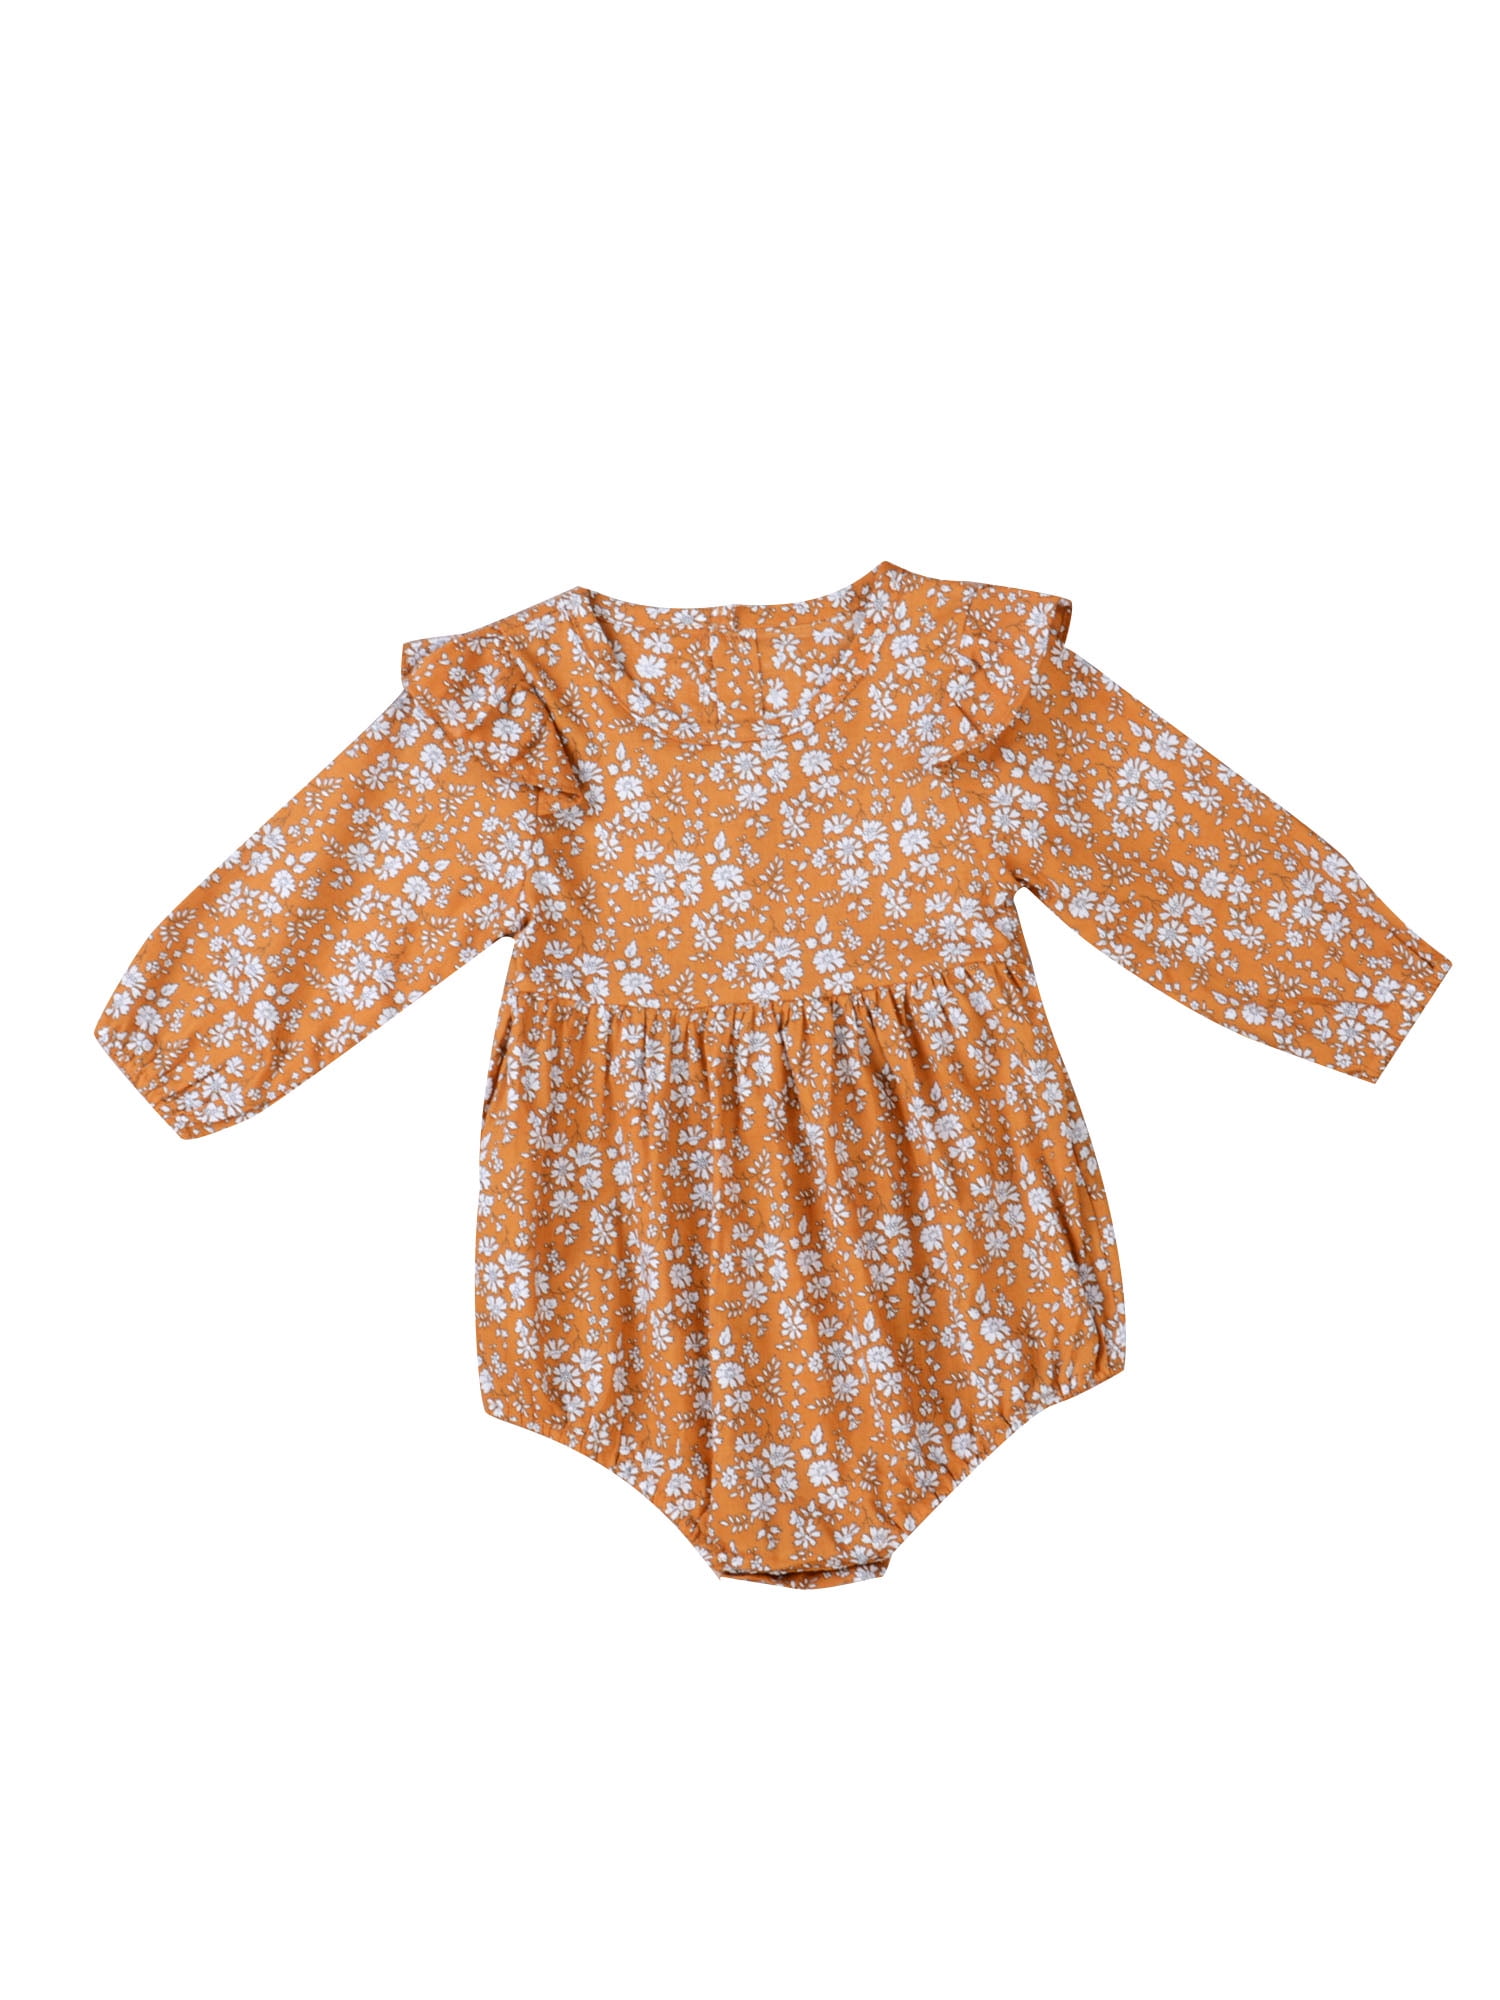 walmart infant girl clothes